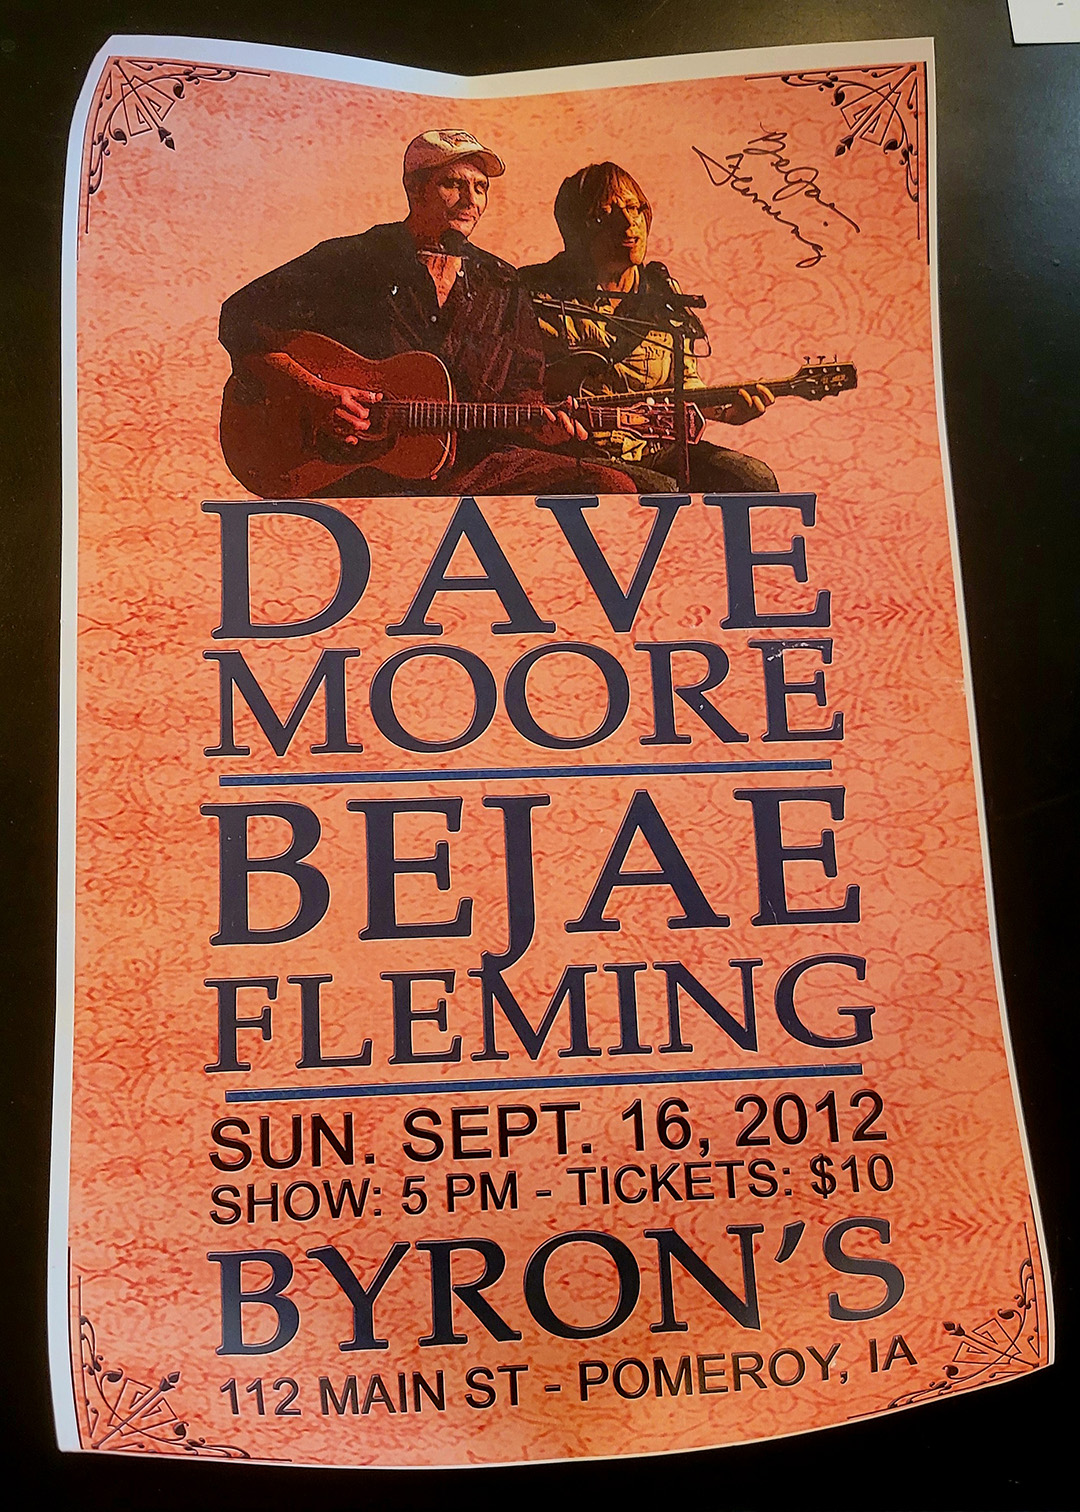 Signed Bejae Fleming Poster w/ David Moore